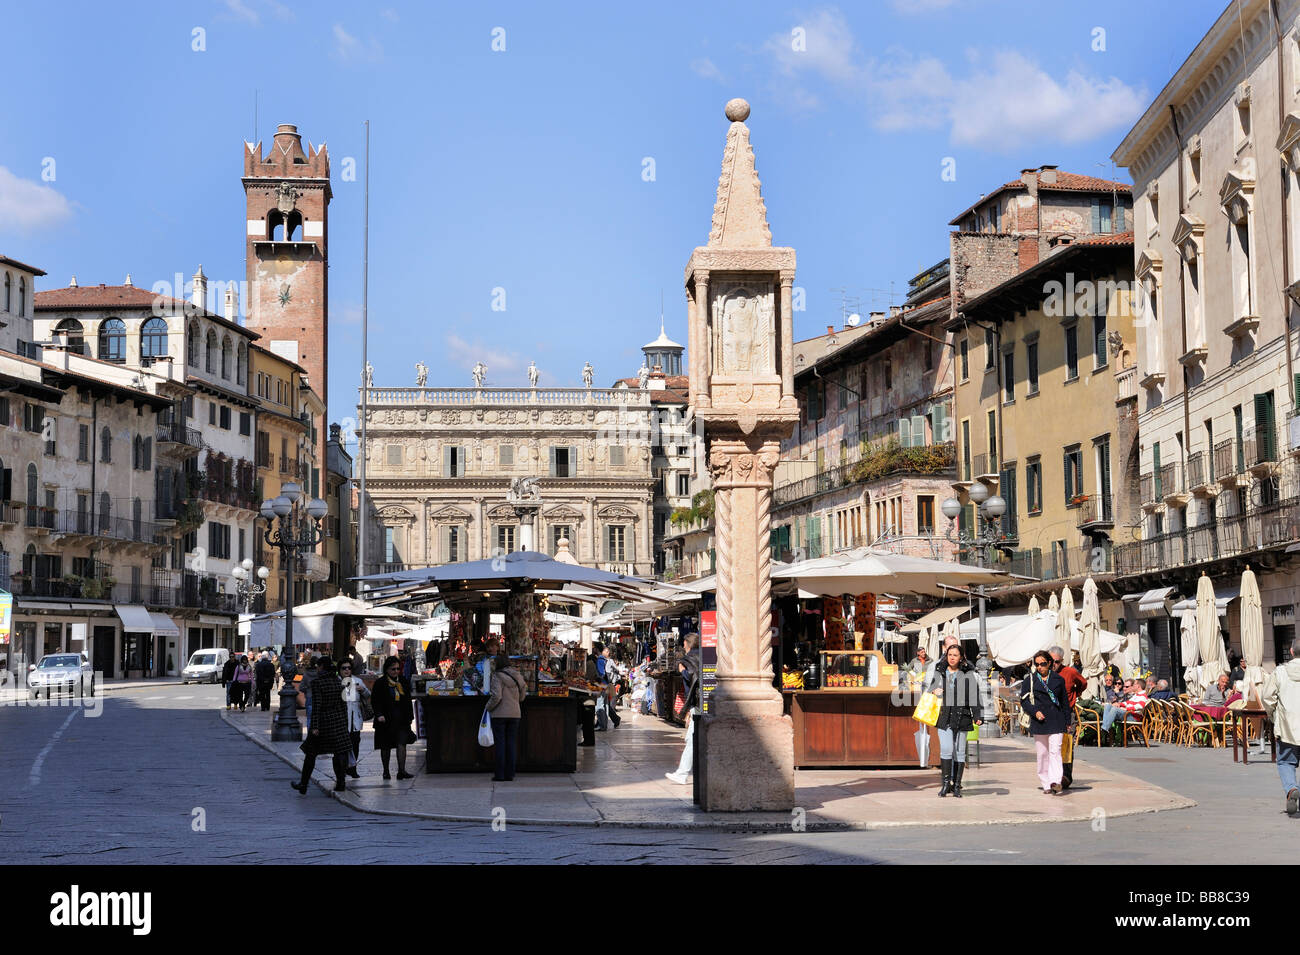 Piazza Erbe square, Verona, Lake Garda, Italy, Europe Stock Photo